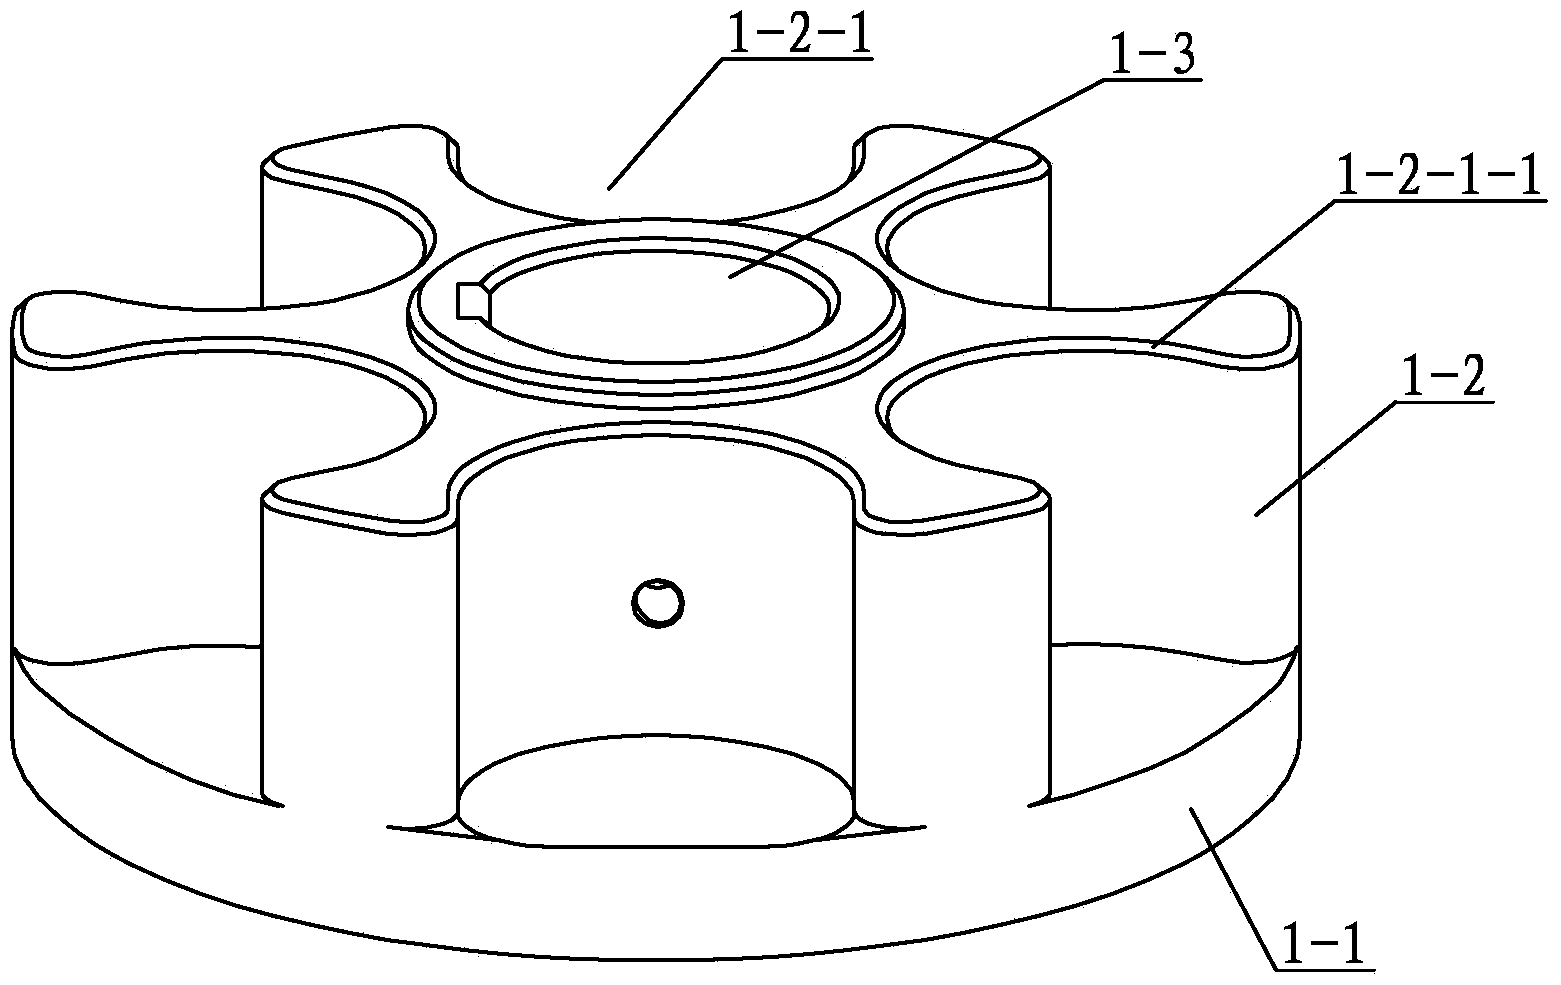 Counterweight-discrete flywheel